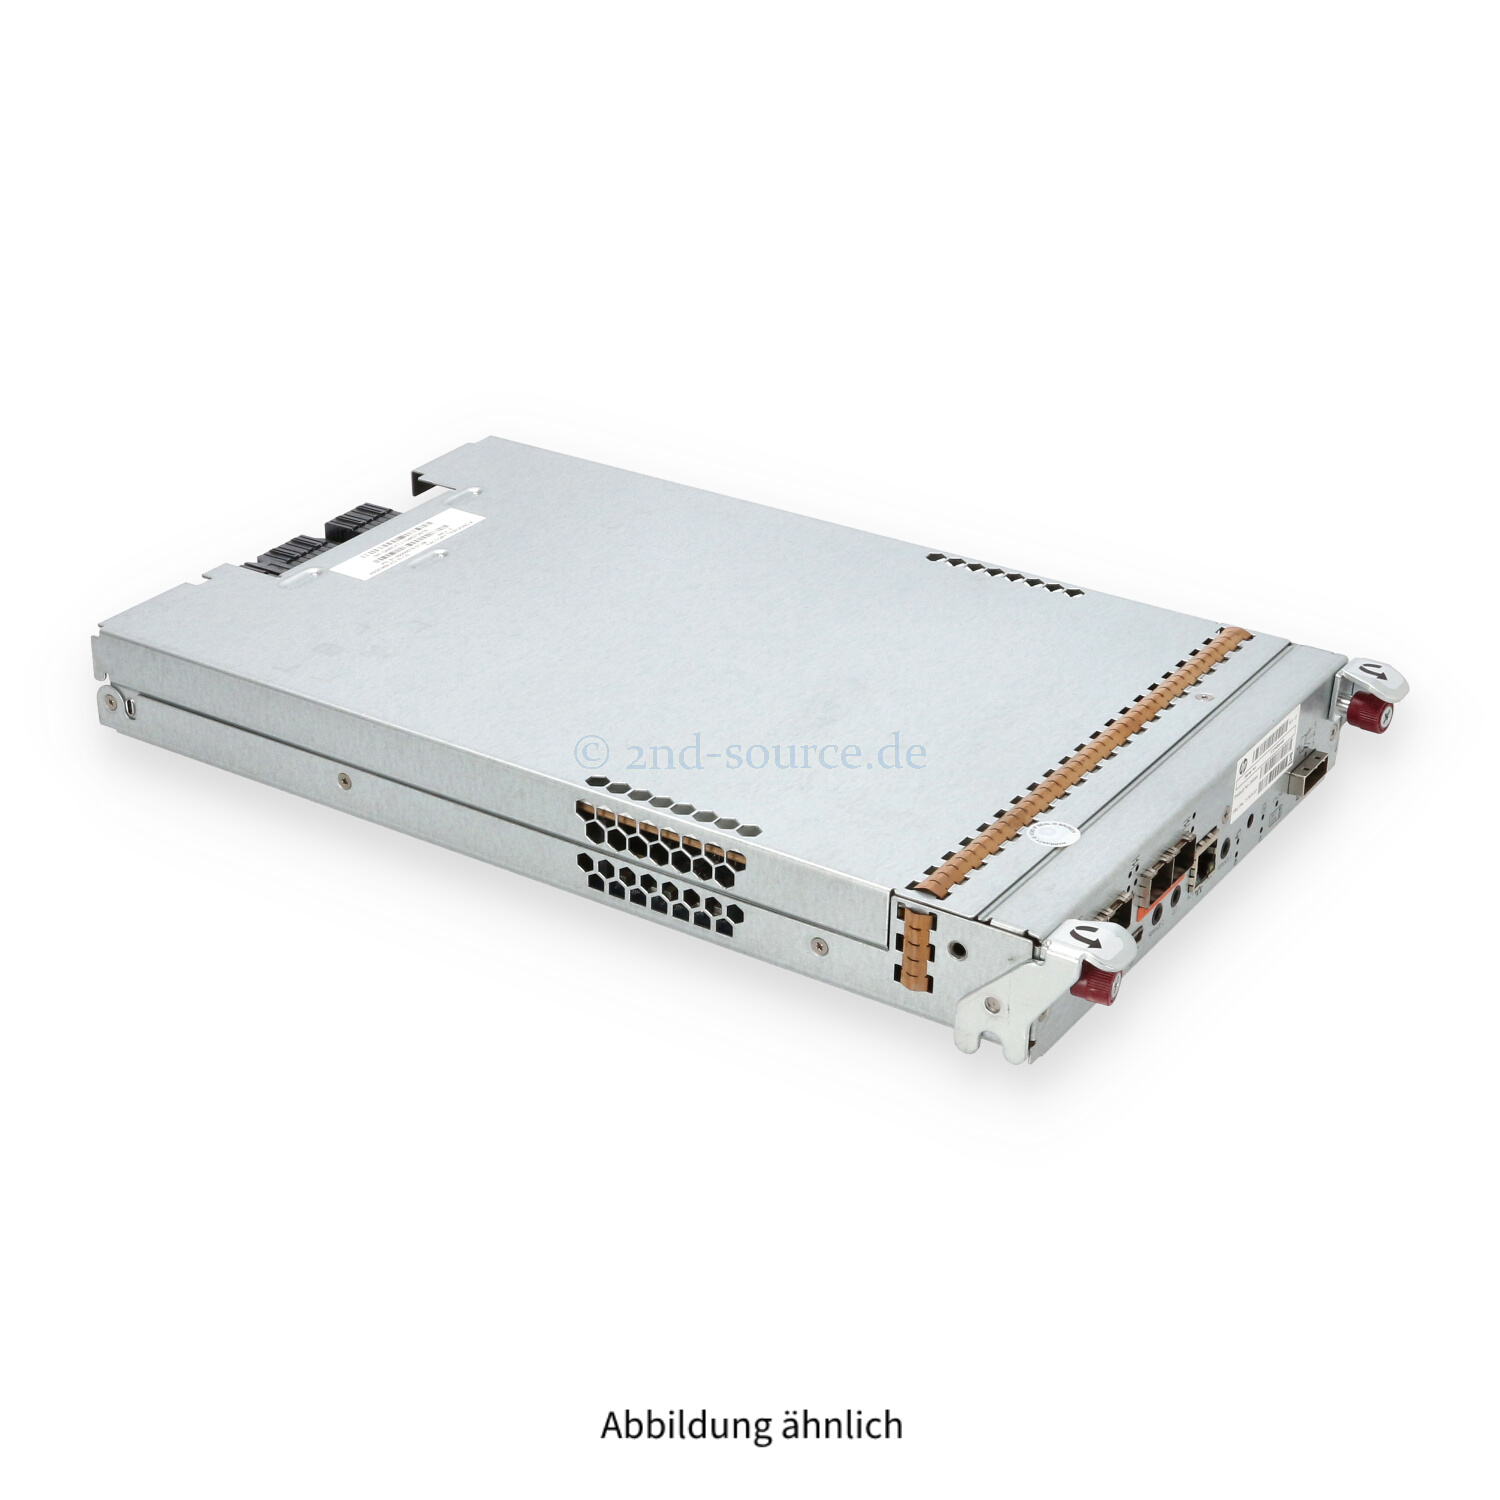 HPE 16G FC SAN Controller Module MSA 2040 C8R09A 717870-001